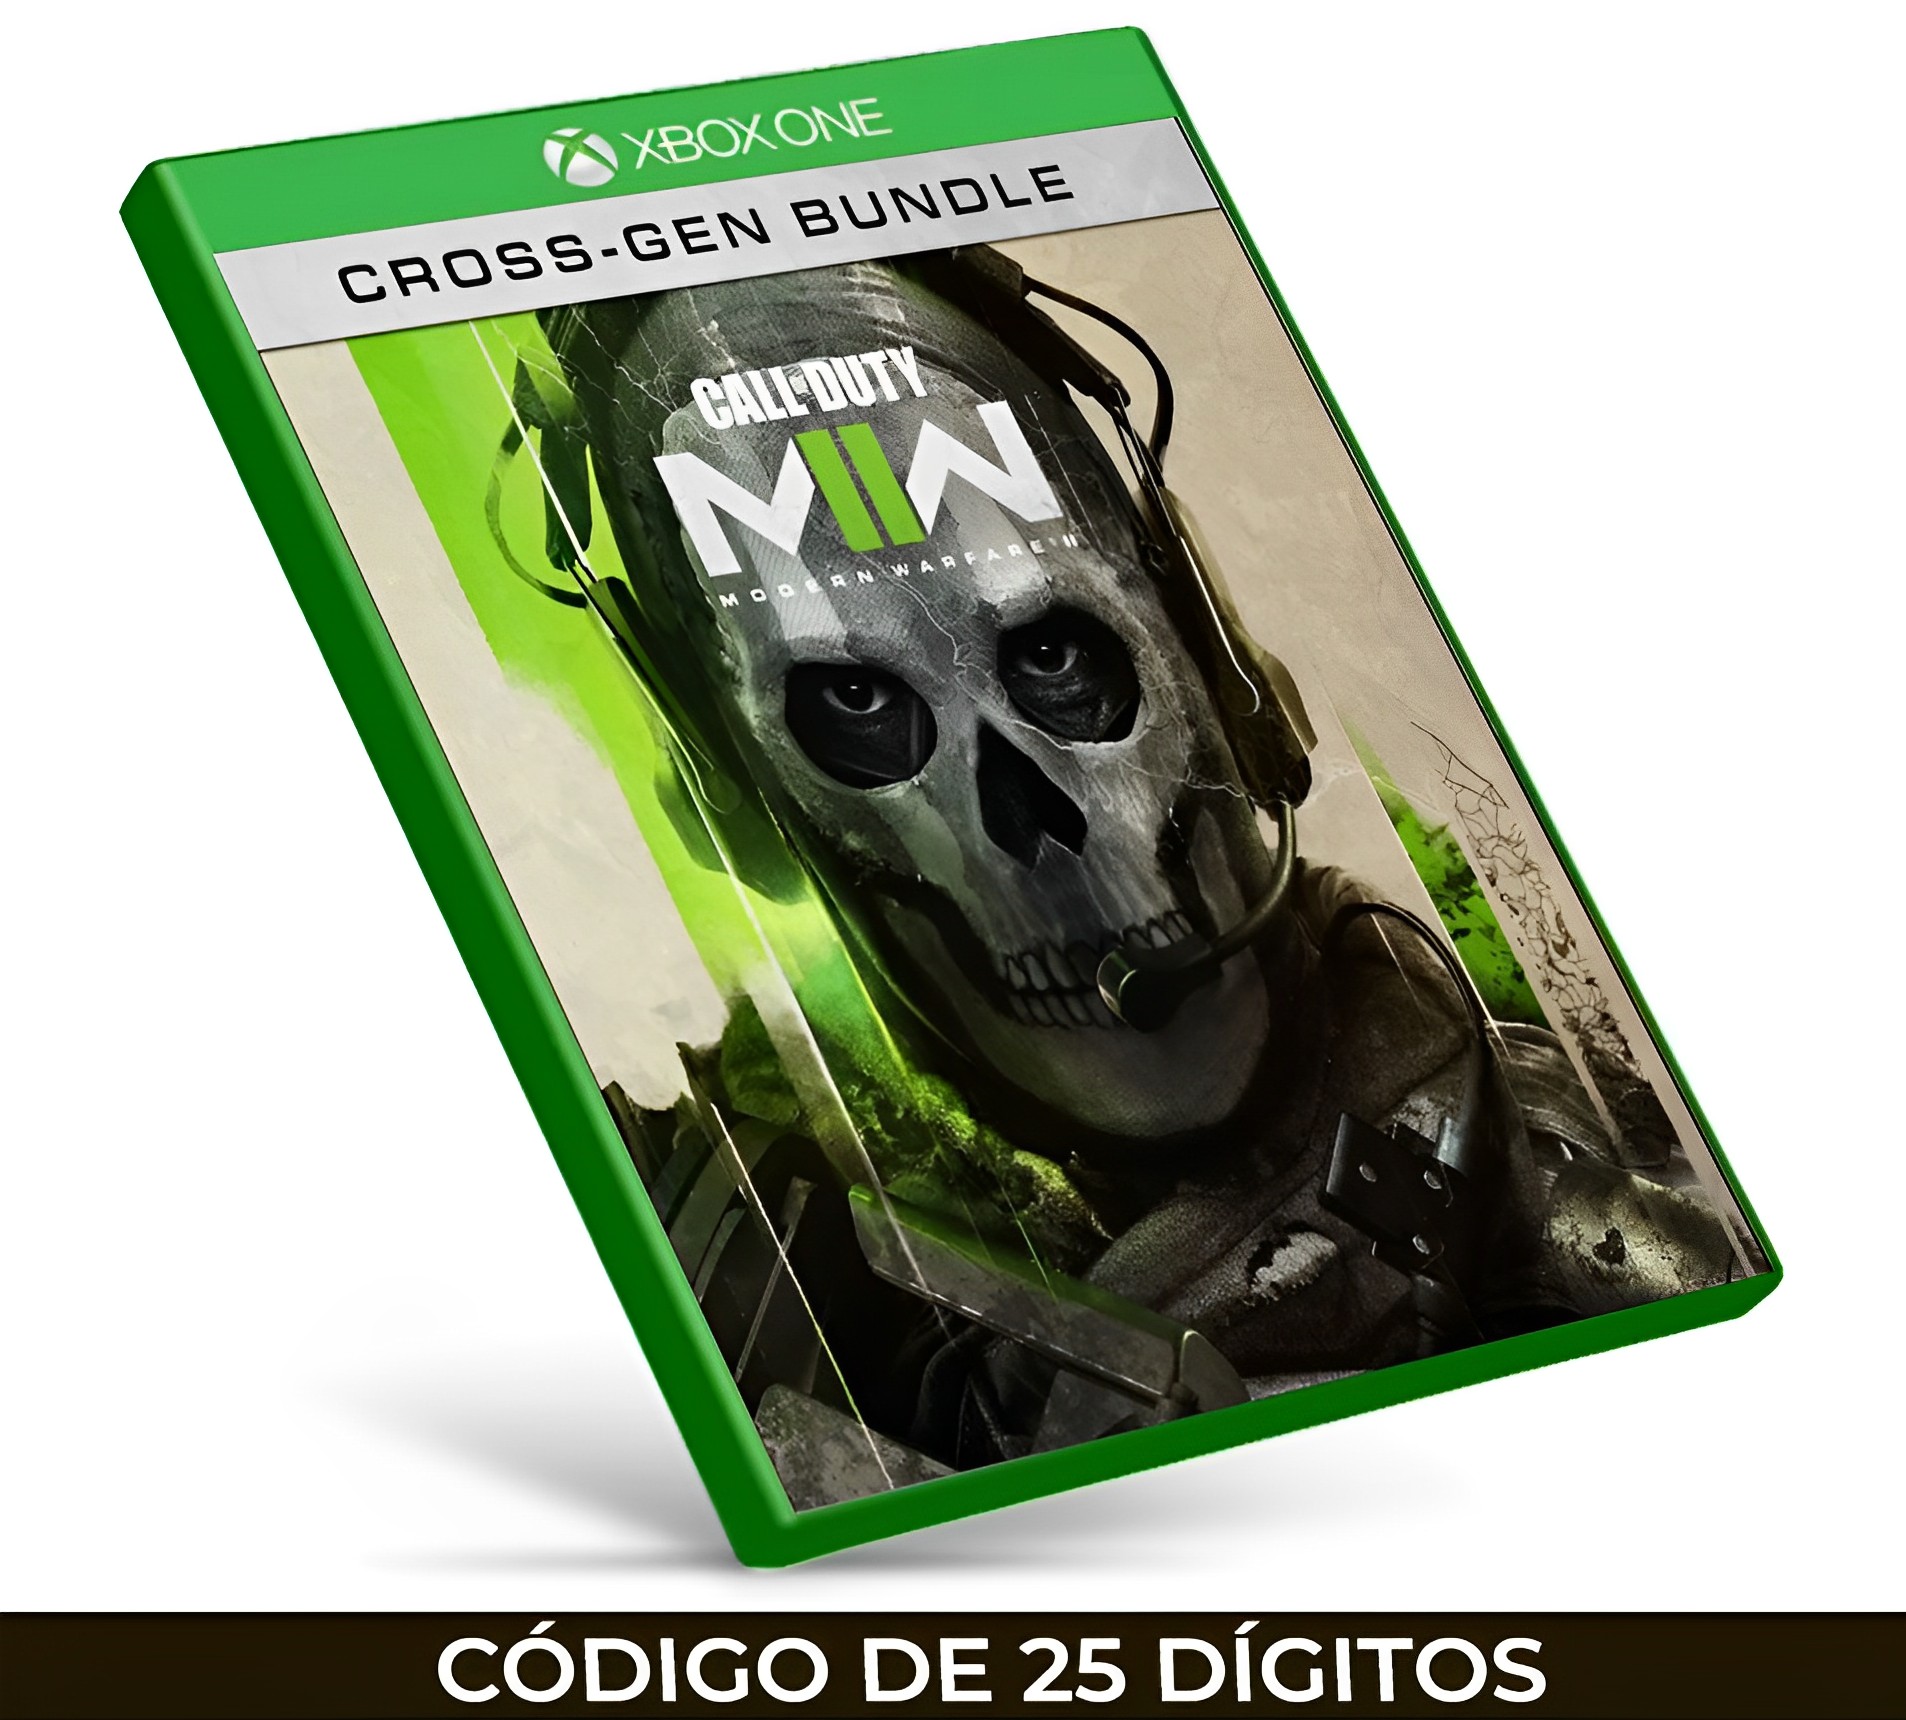 Jogo Xbox Series X Call Of Duty: Modern Warfare II